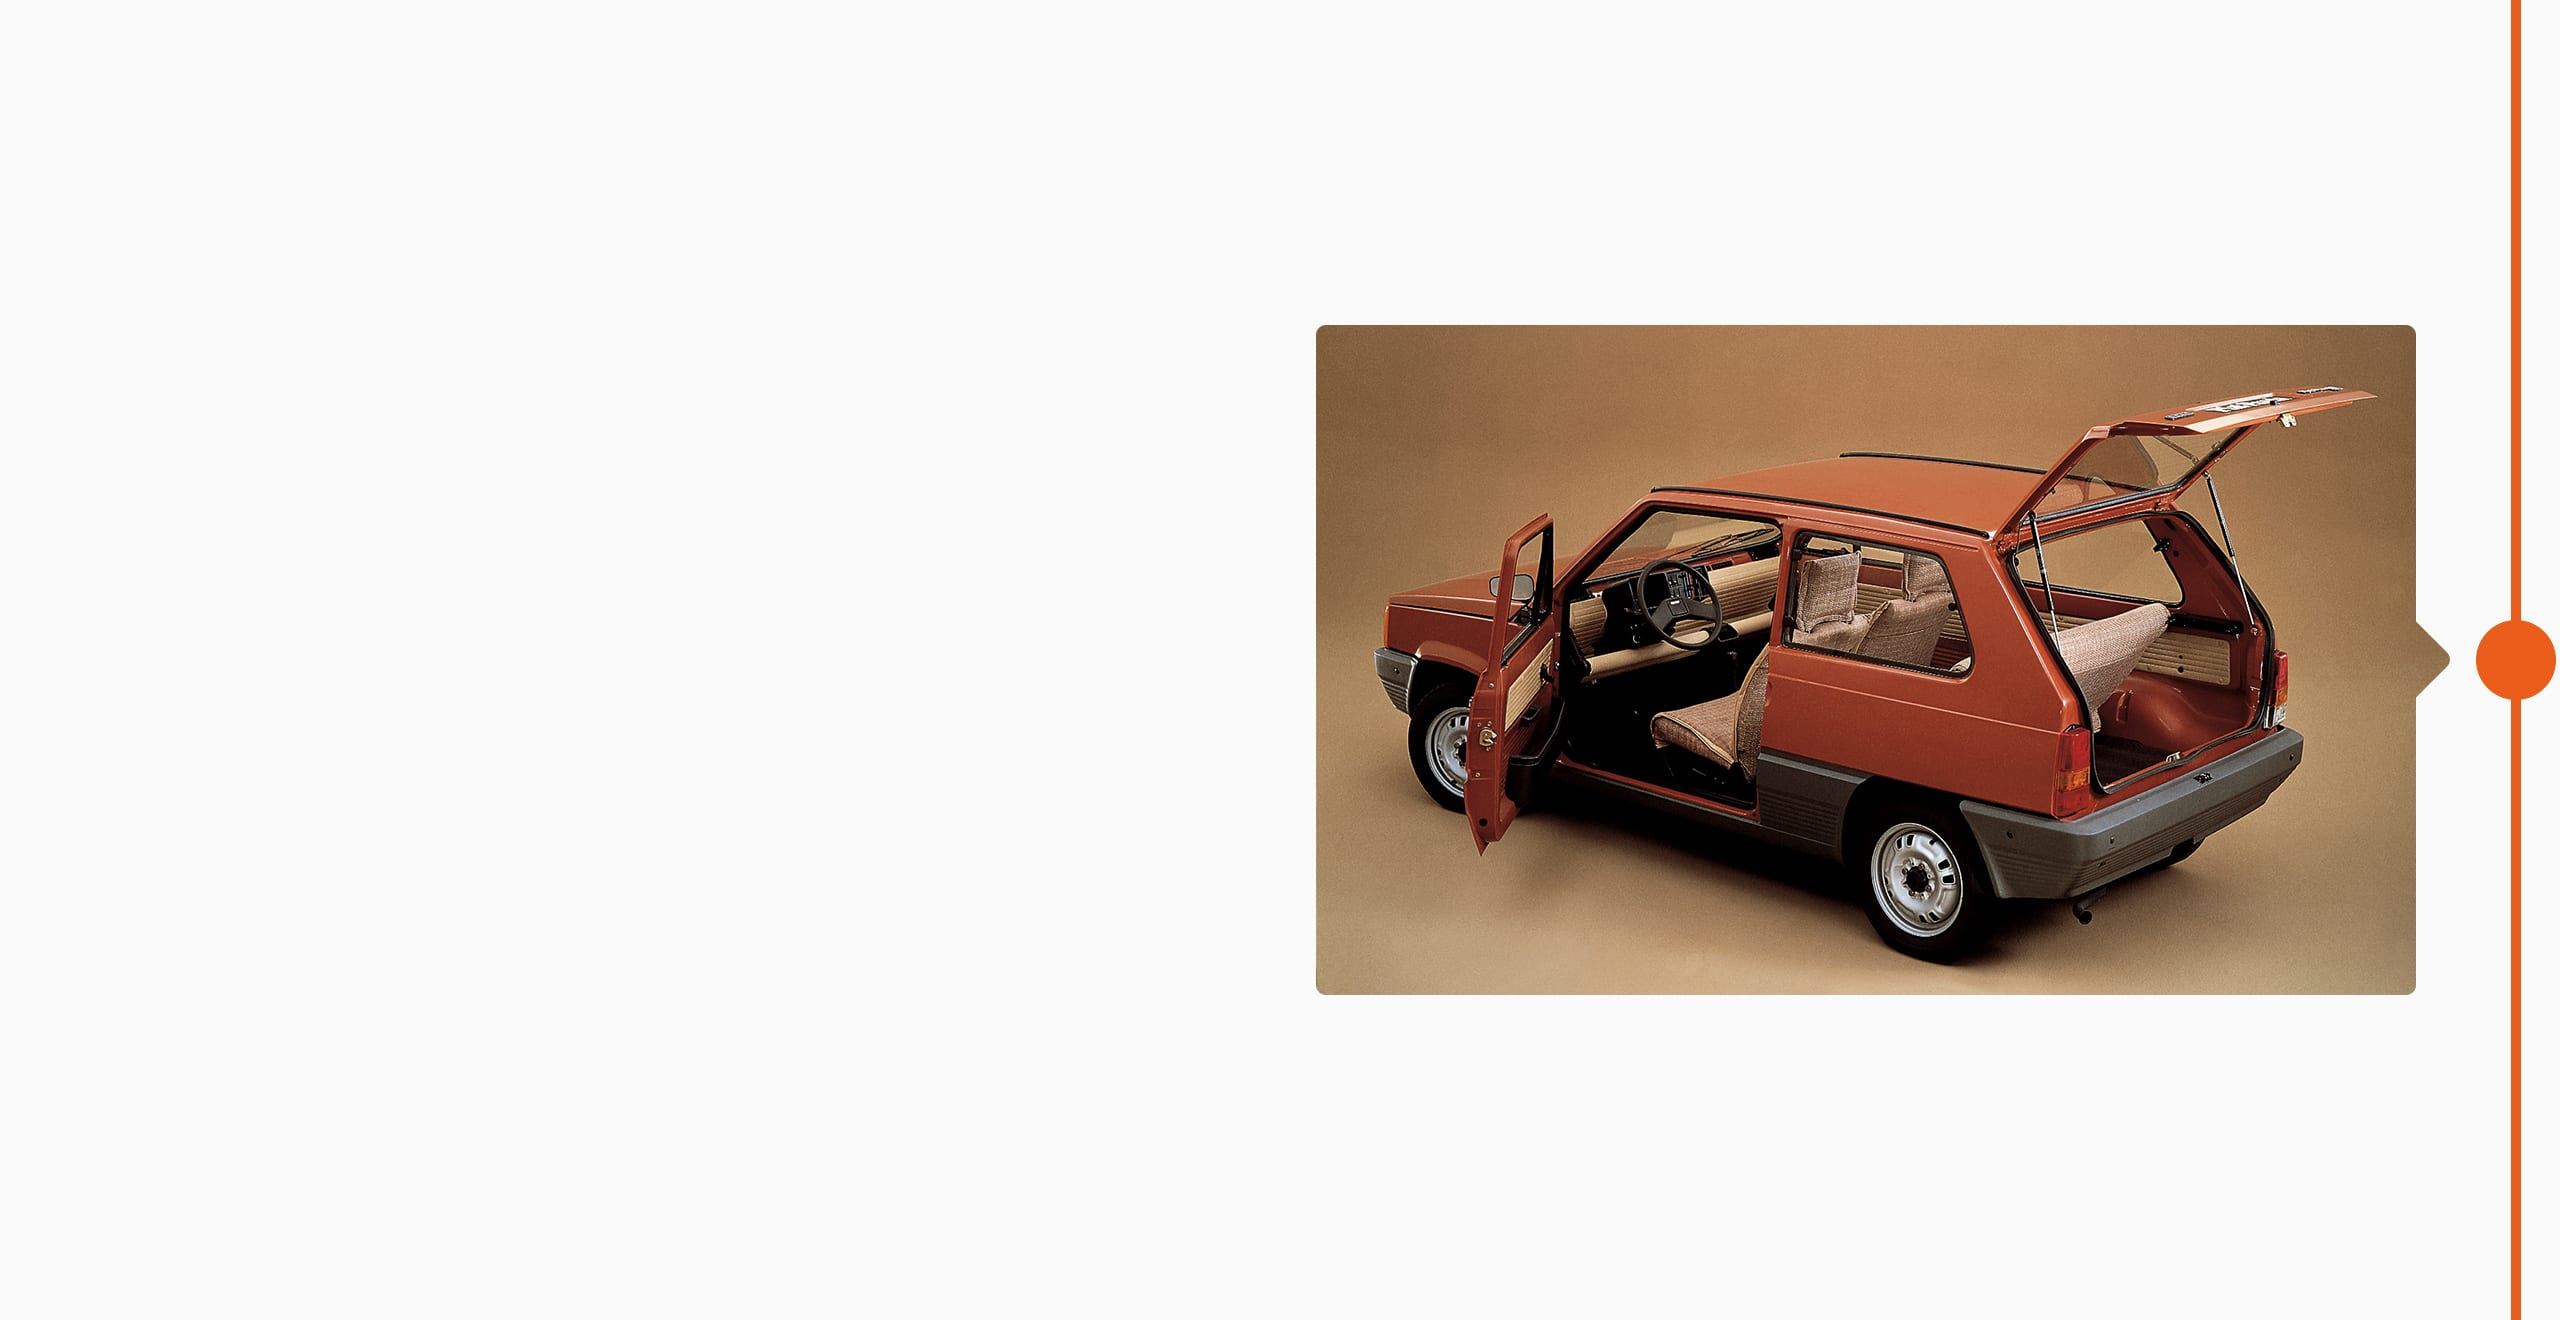 SEAT varumärke historia 1980 - SEAT Panda hatchback bil historia